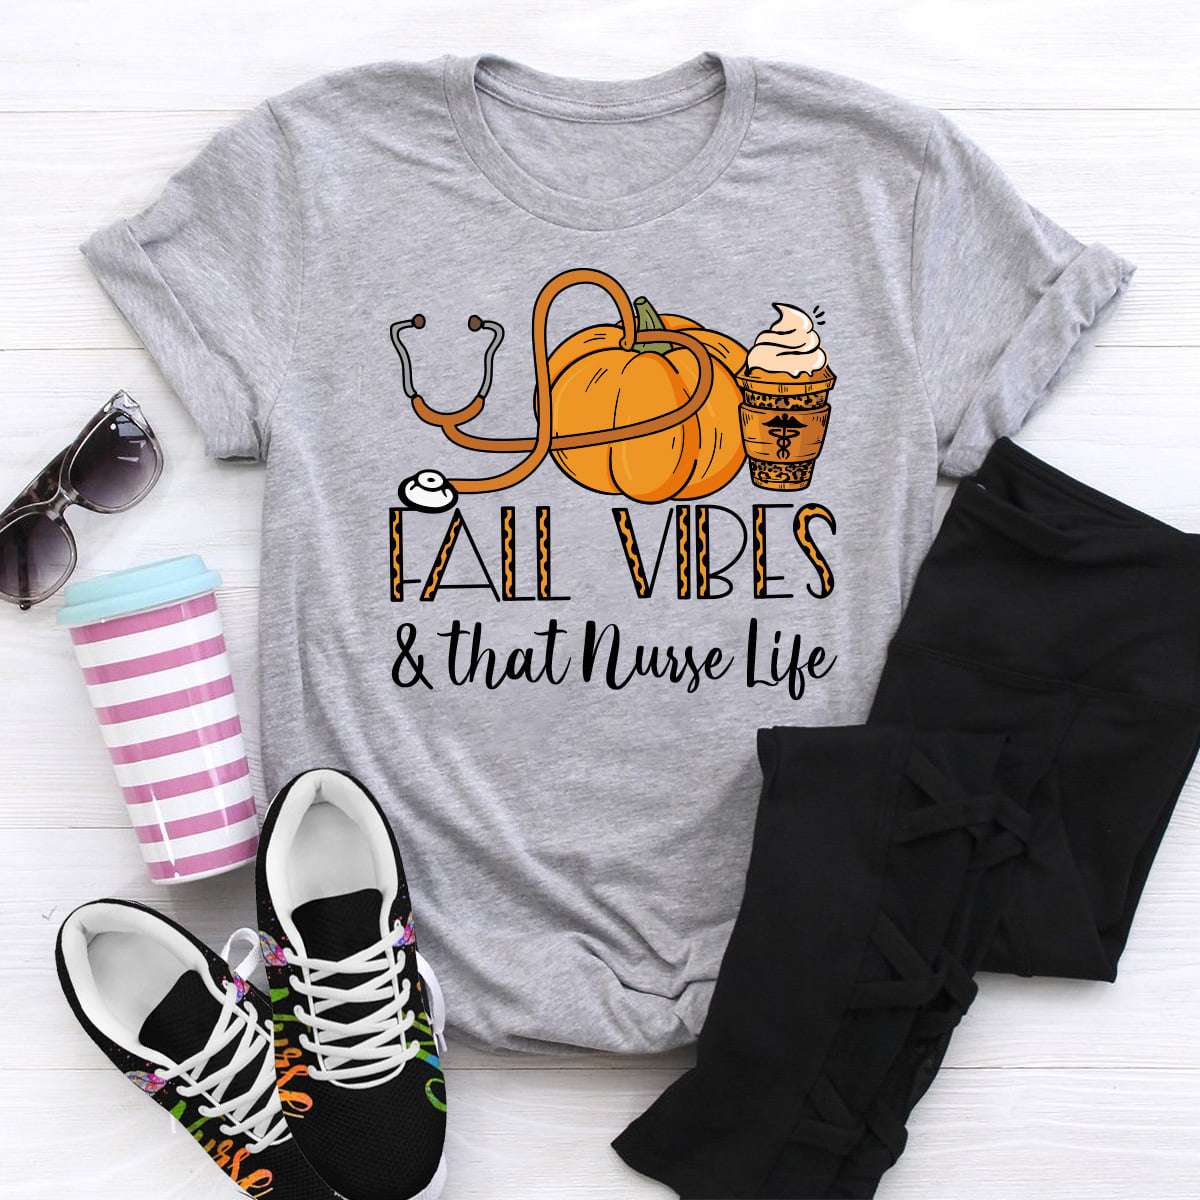 Fall vibes and that nurse life - Nurse loves fall, fall the wonderful season